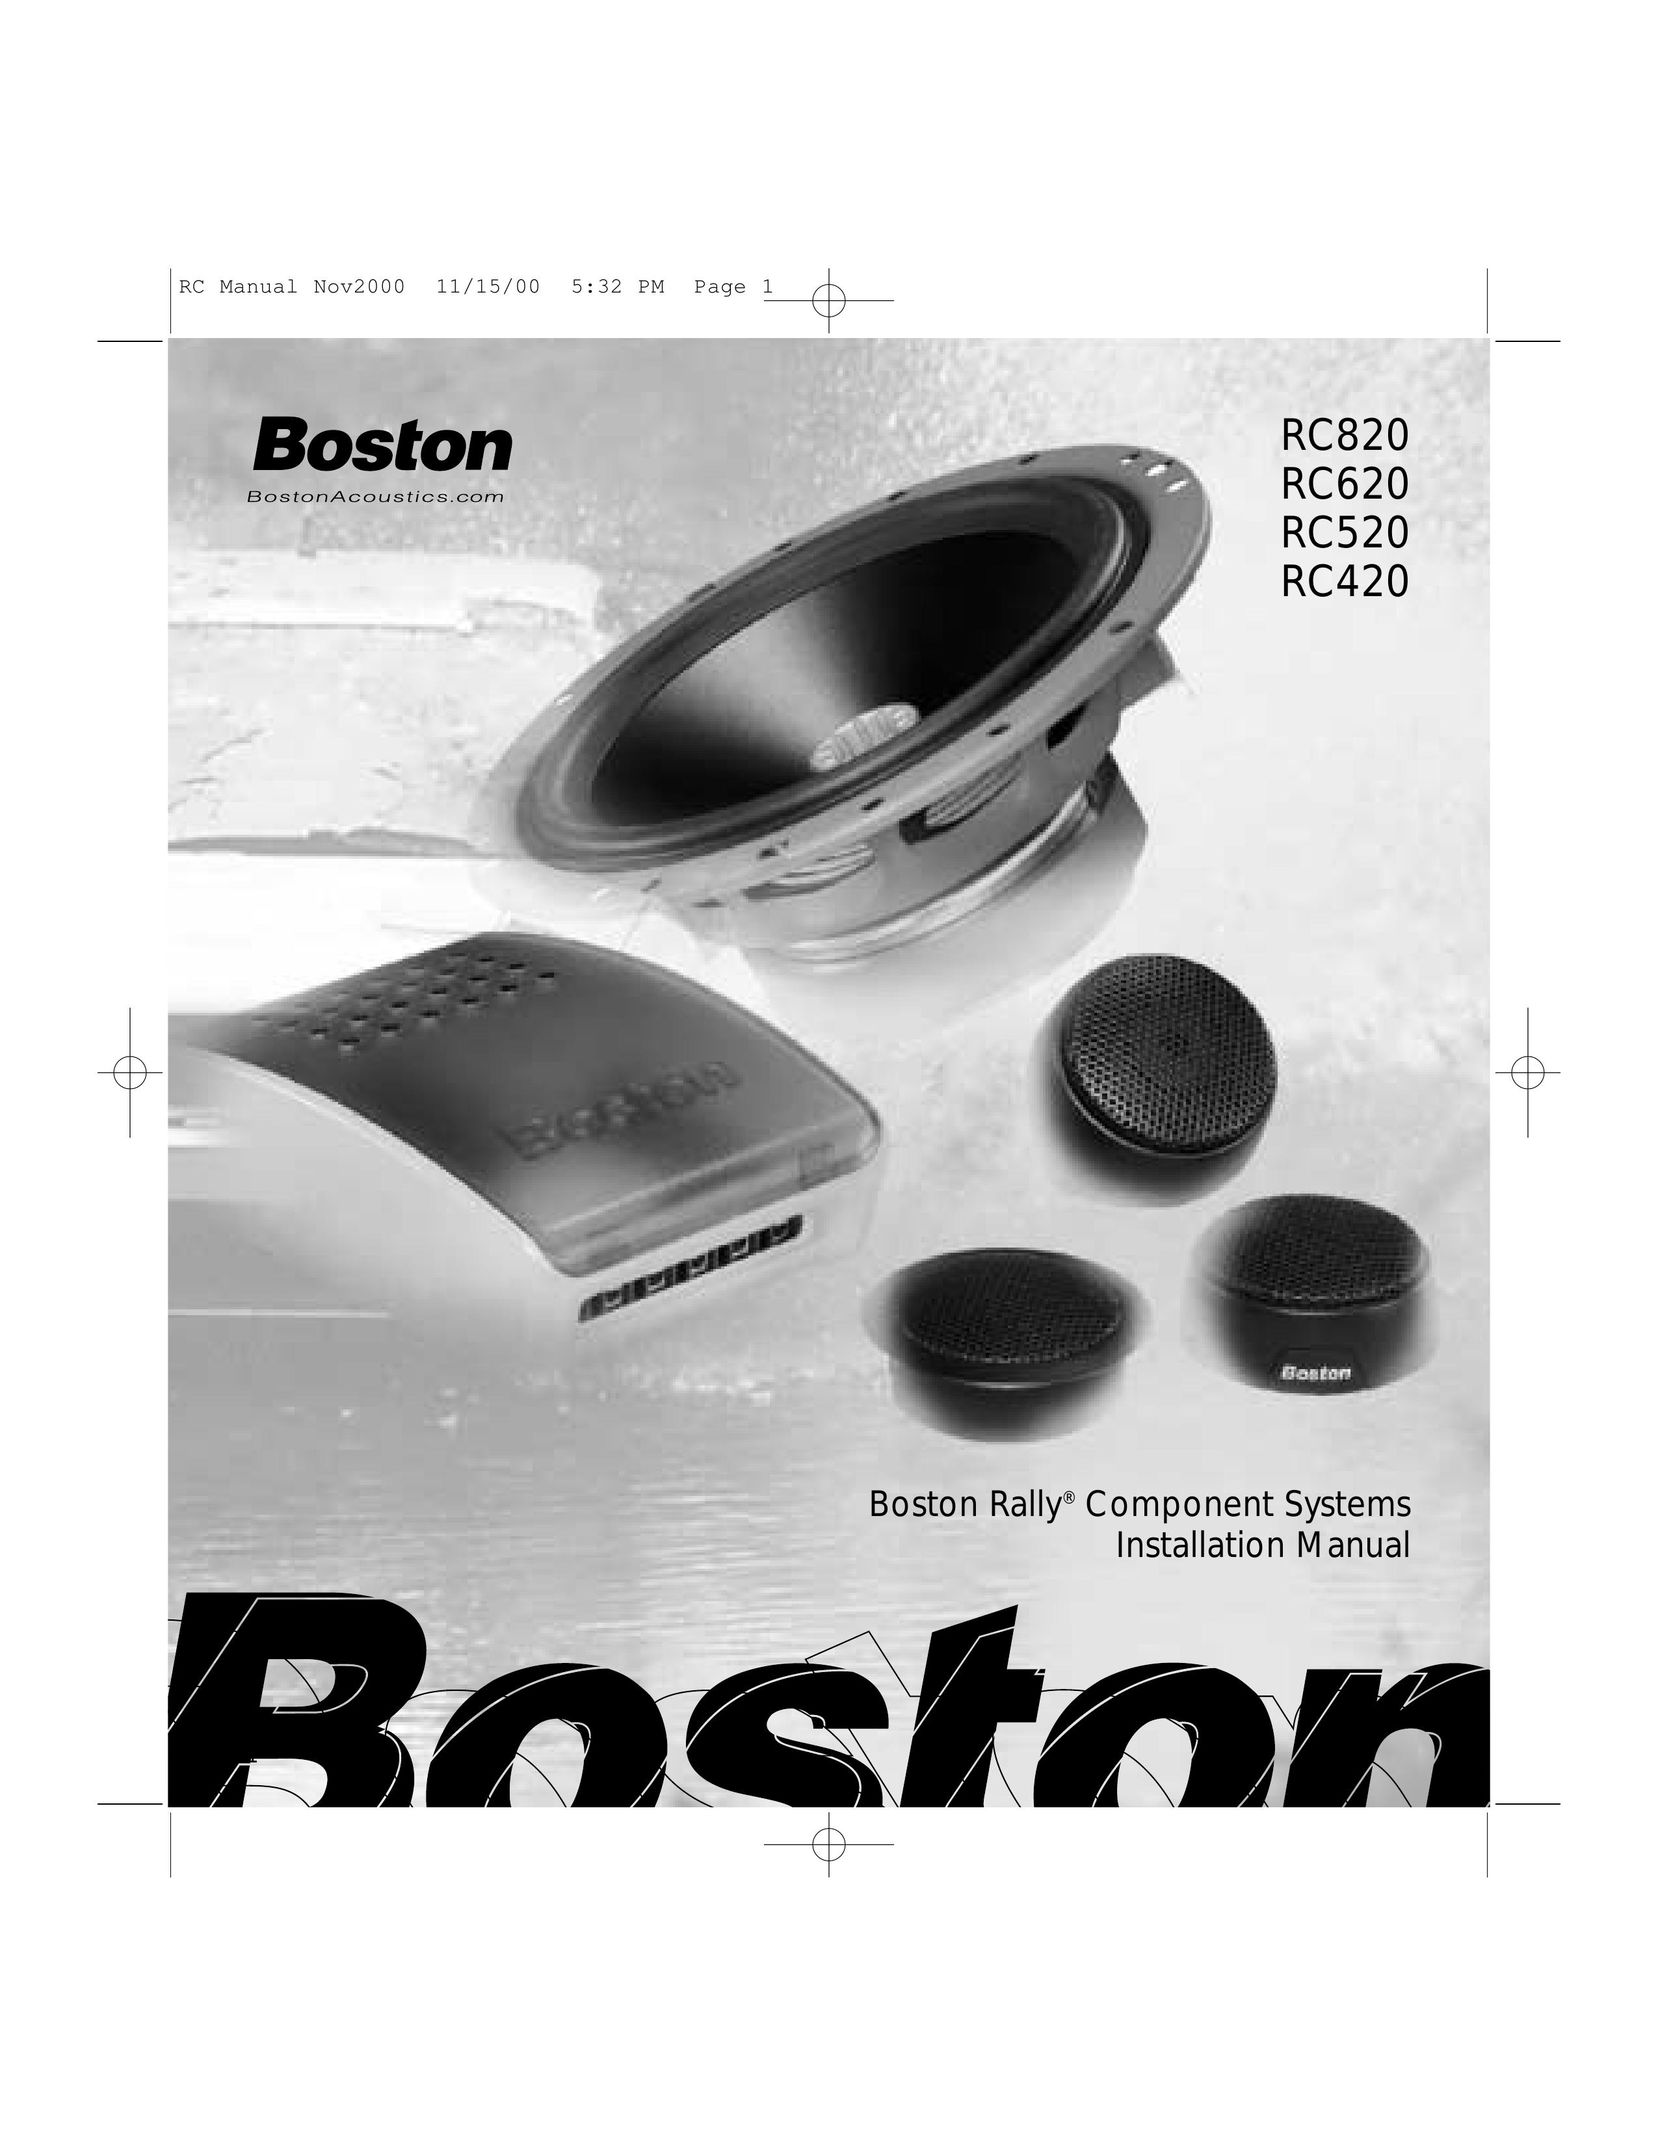 Boston Acoustics RC620 Car Speaker User Manual